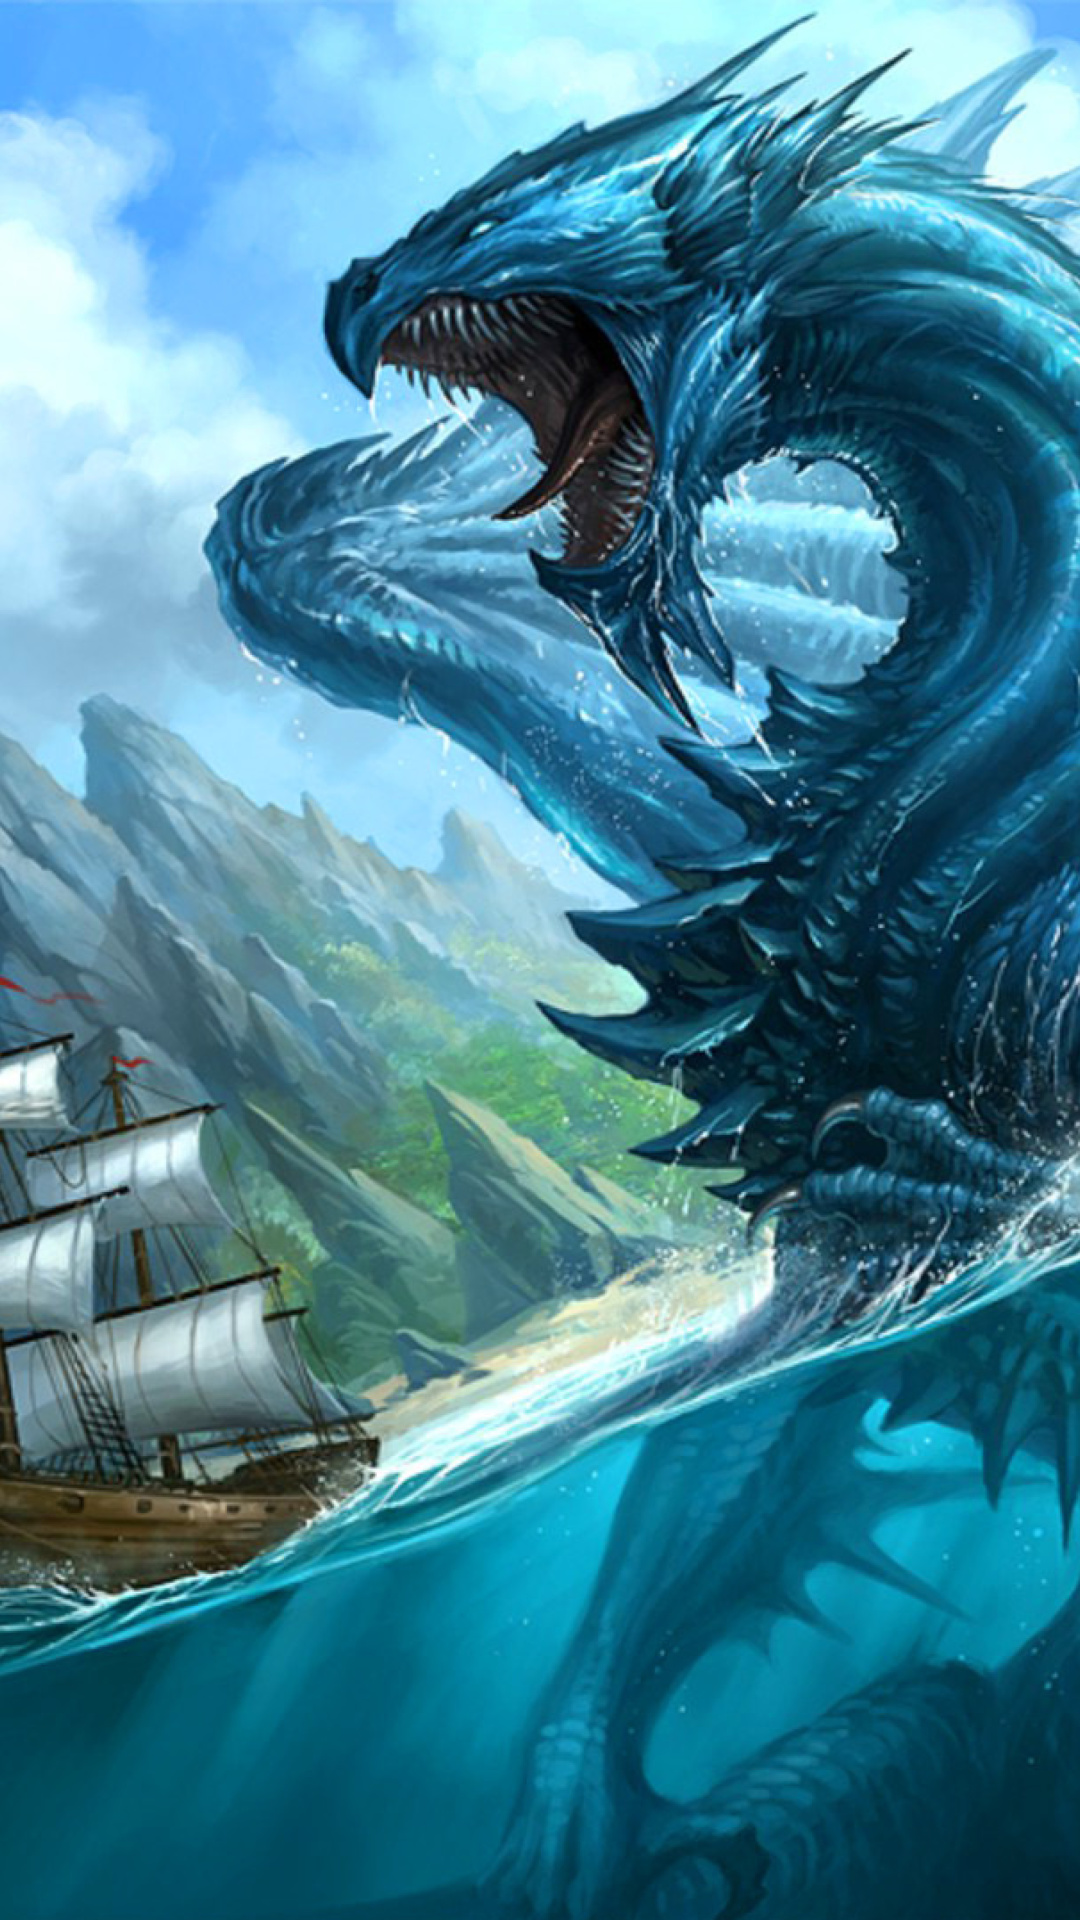 Dragon attacking on ship wallpaper 1080x1920